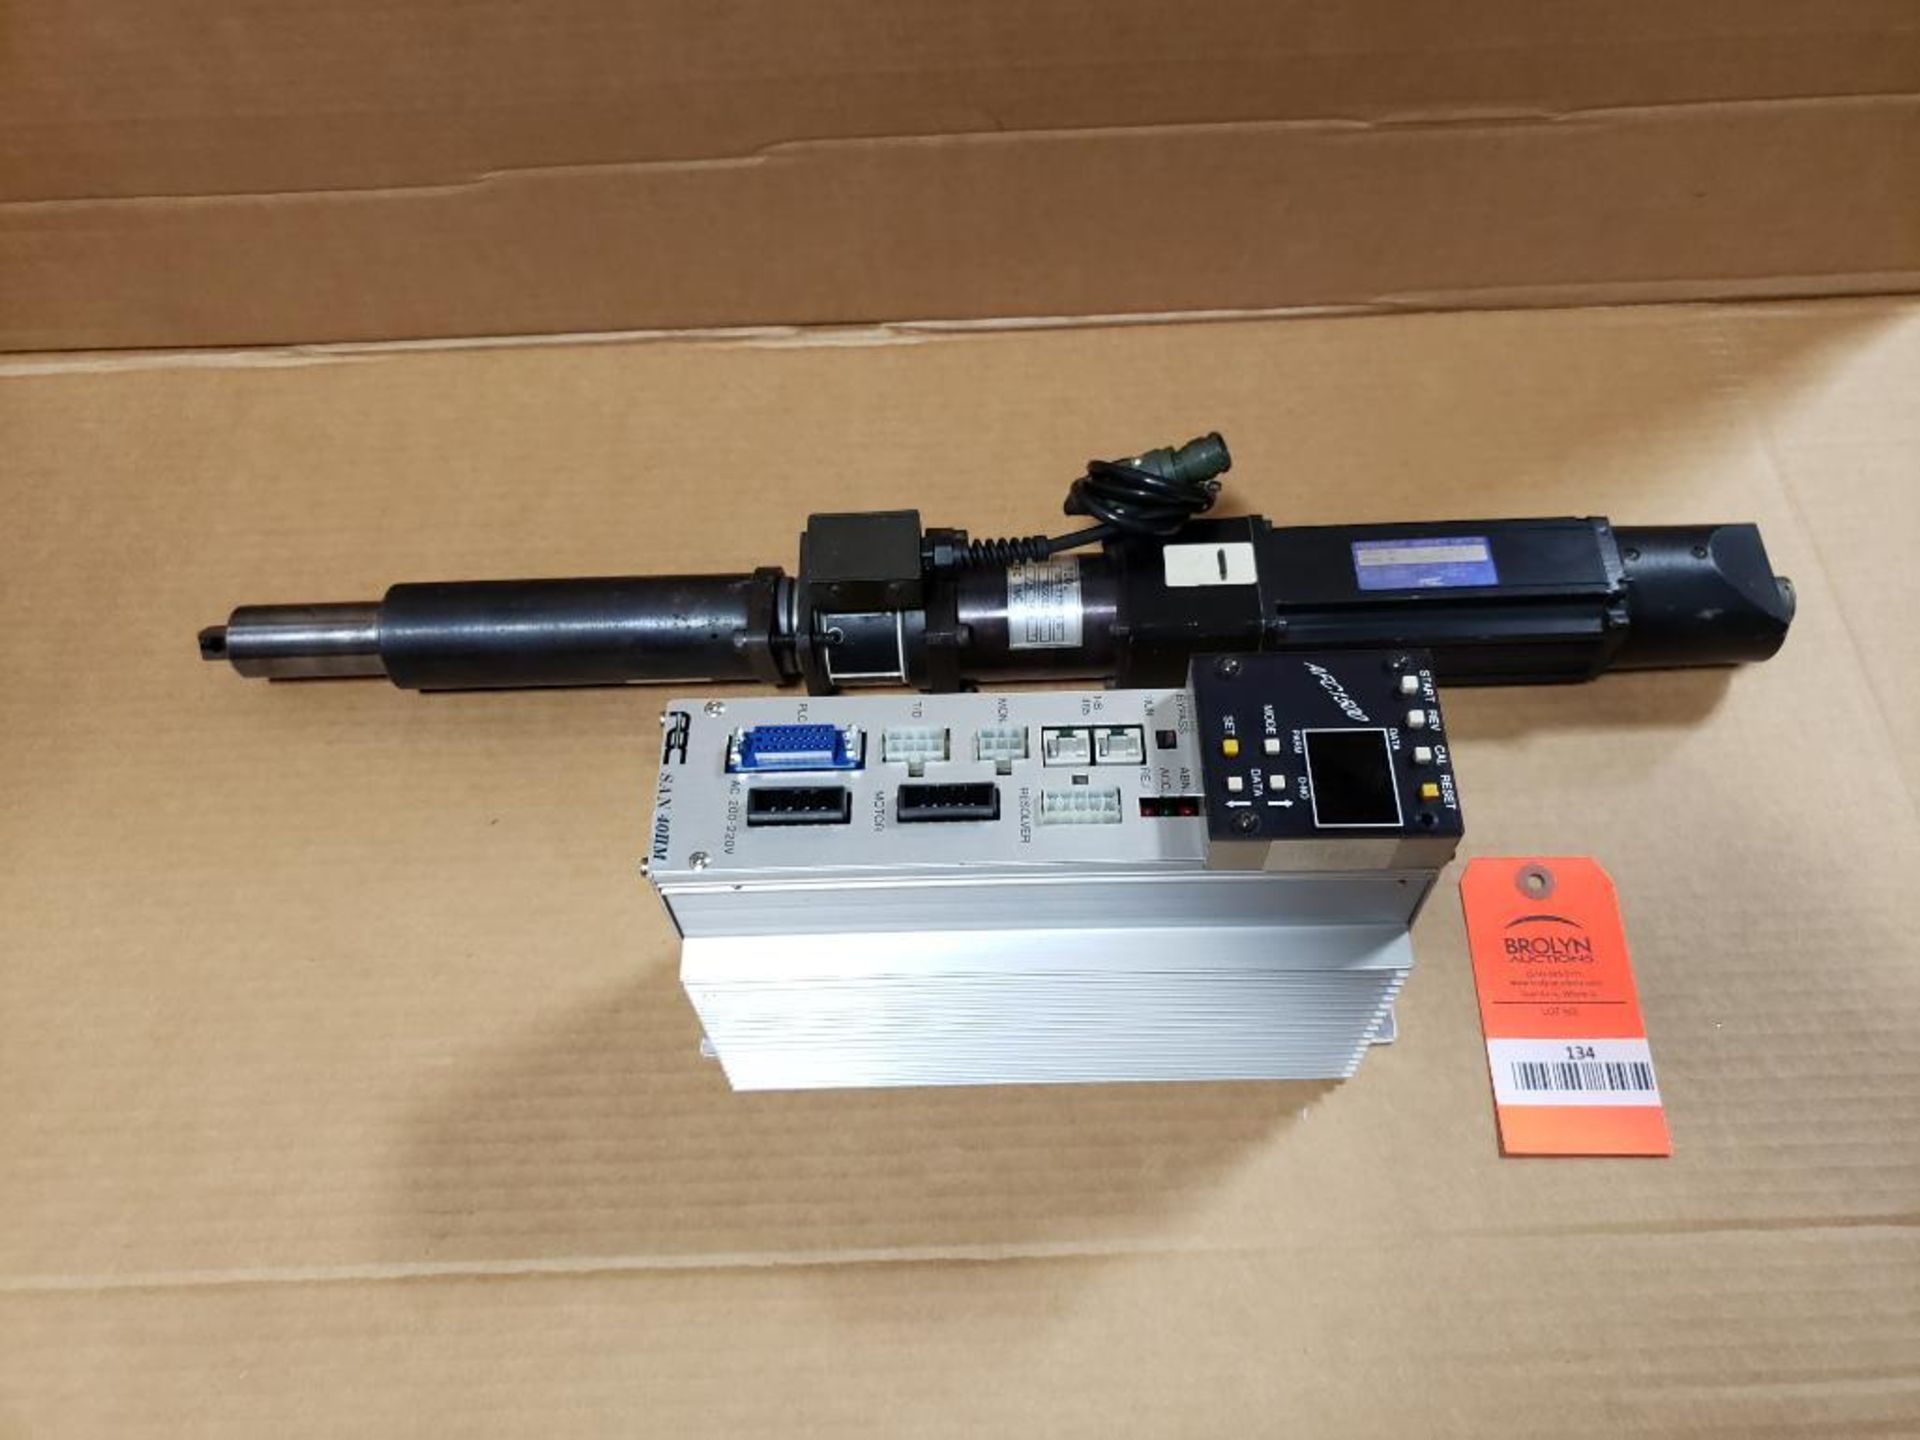 FEC SAN-40IIM nutrunner and controller. NFT-132RM3-S tool.